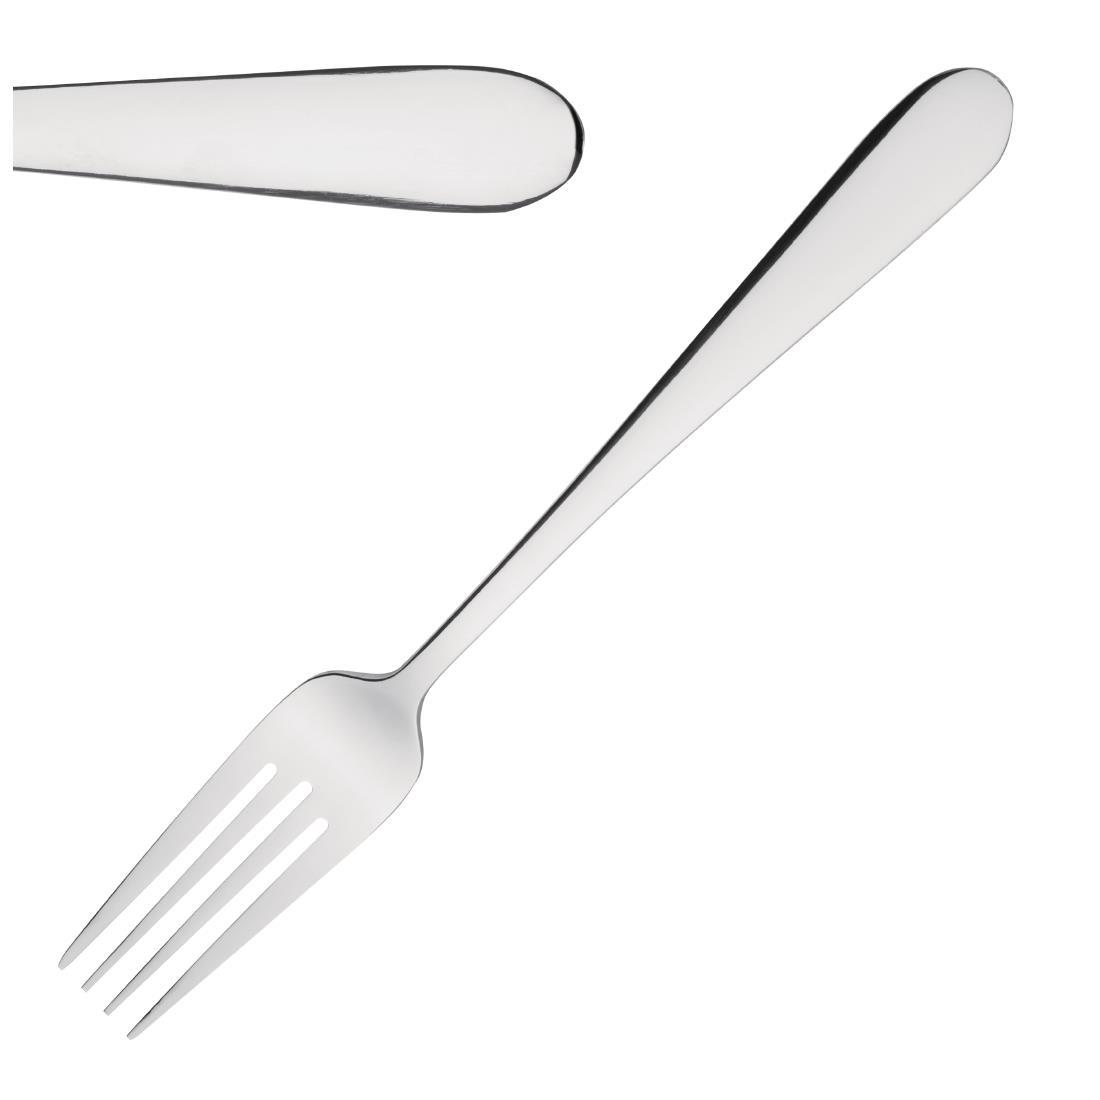 Olympia Buckingham Table Fork (Pack of 12) - U877  - 1